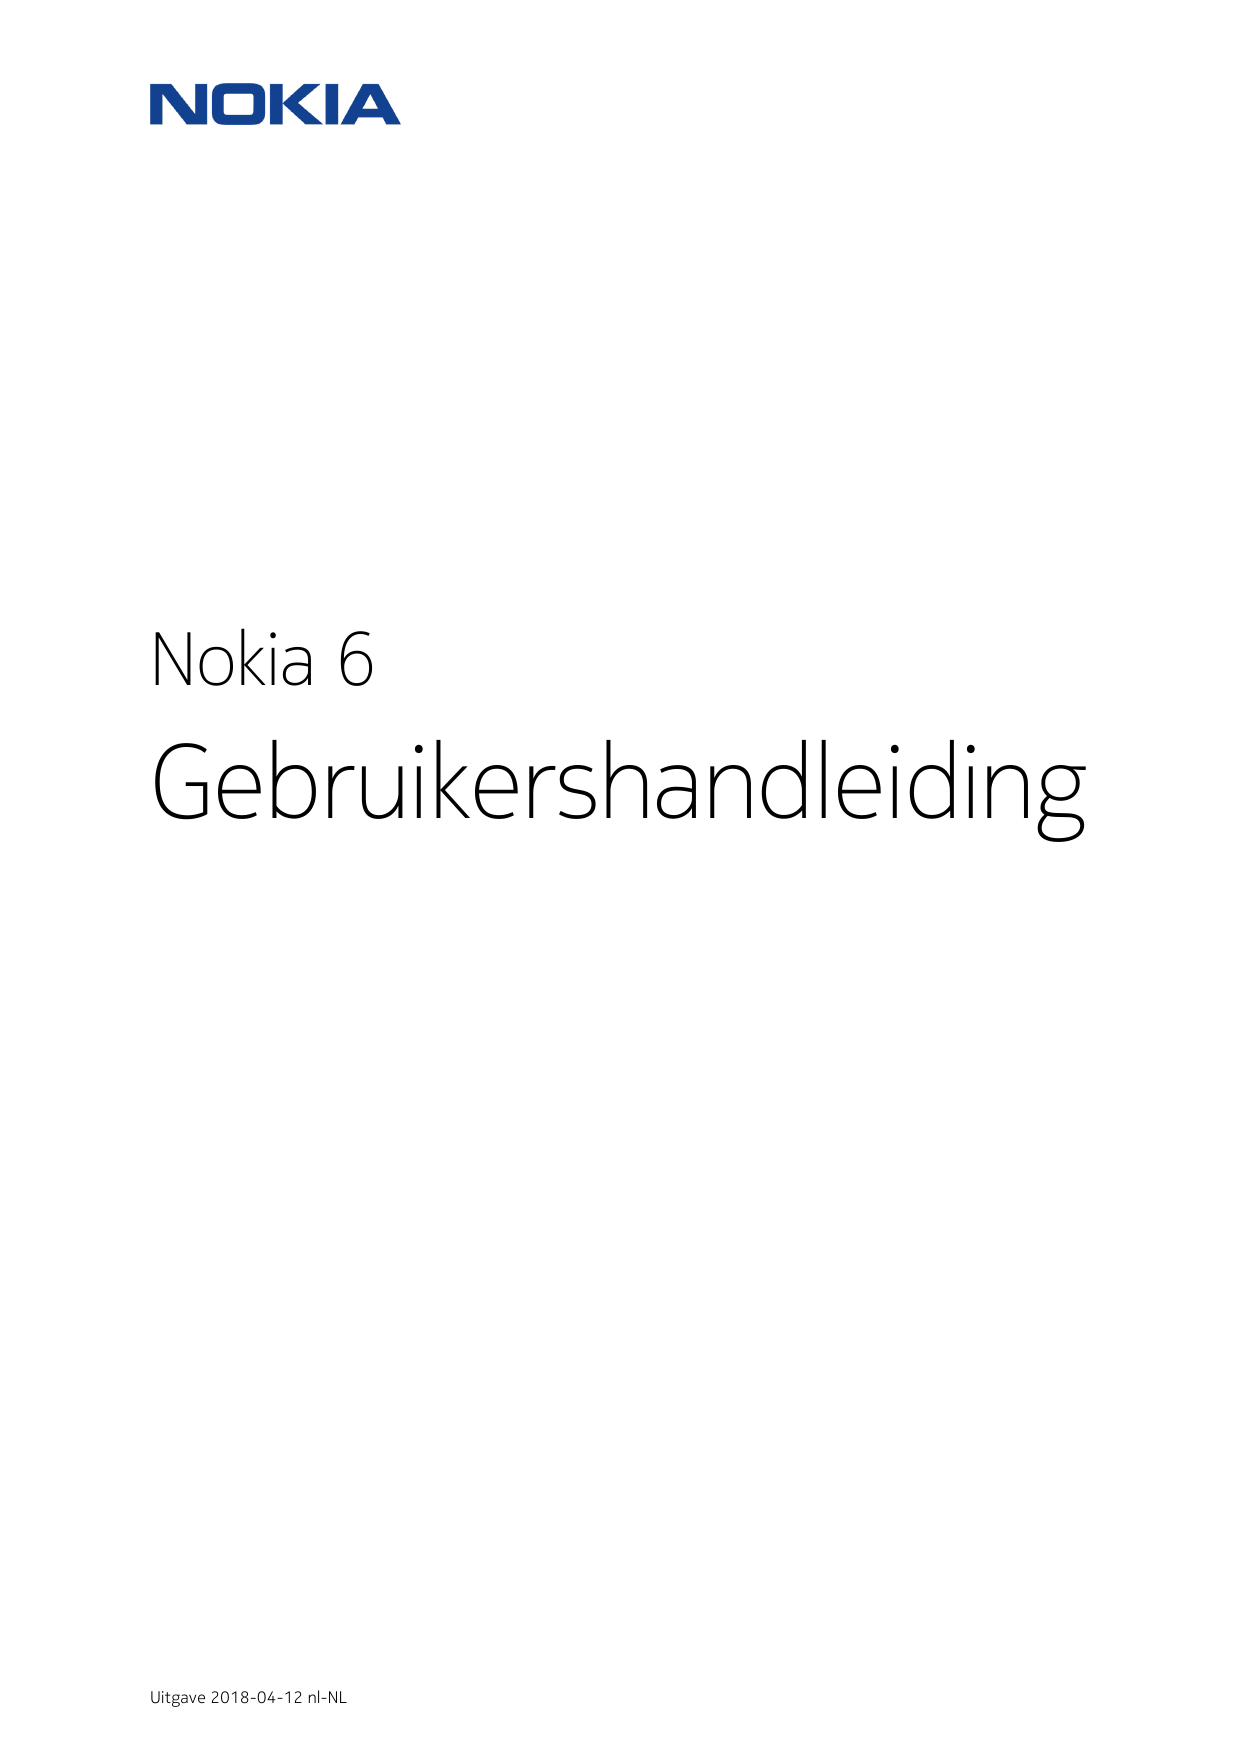 Nokia 6GebruikershandleidingUitgave 2018-04-12 nl-NL